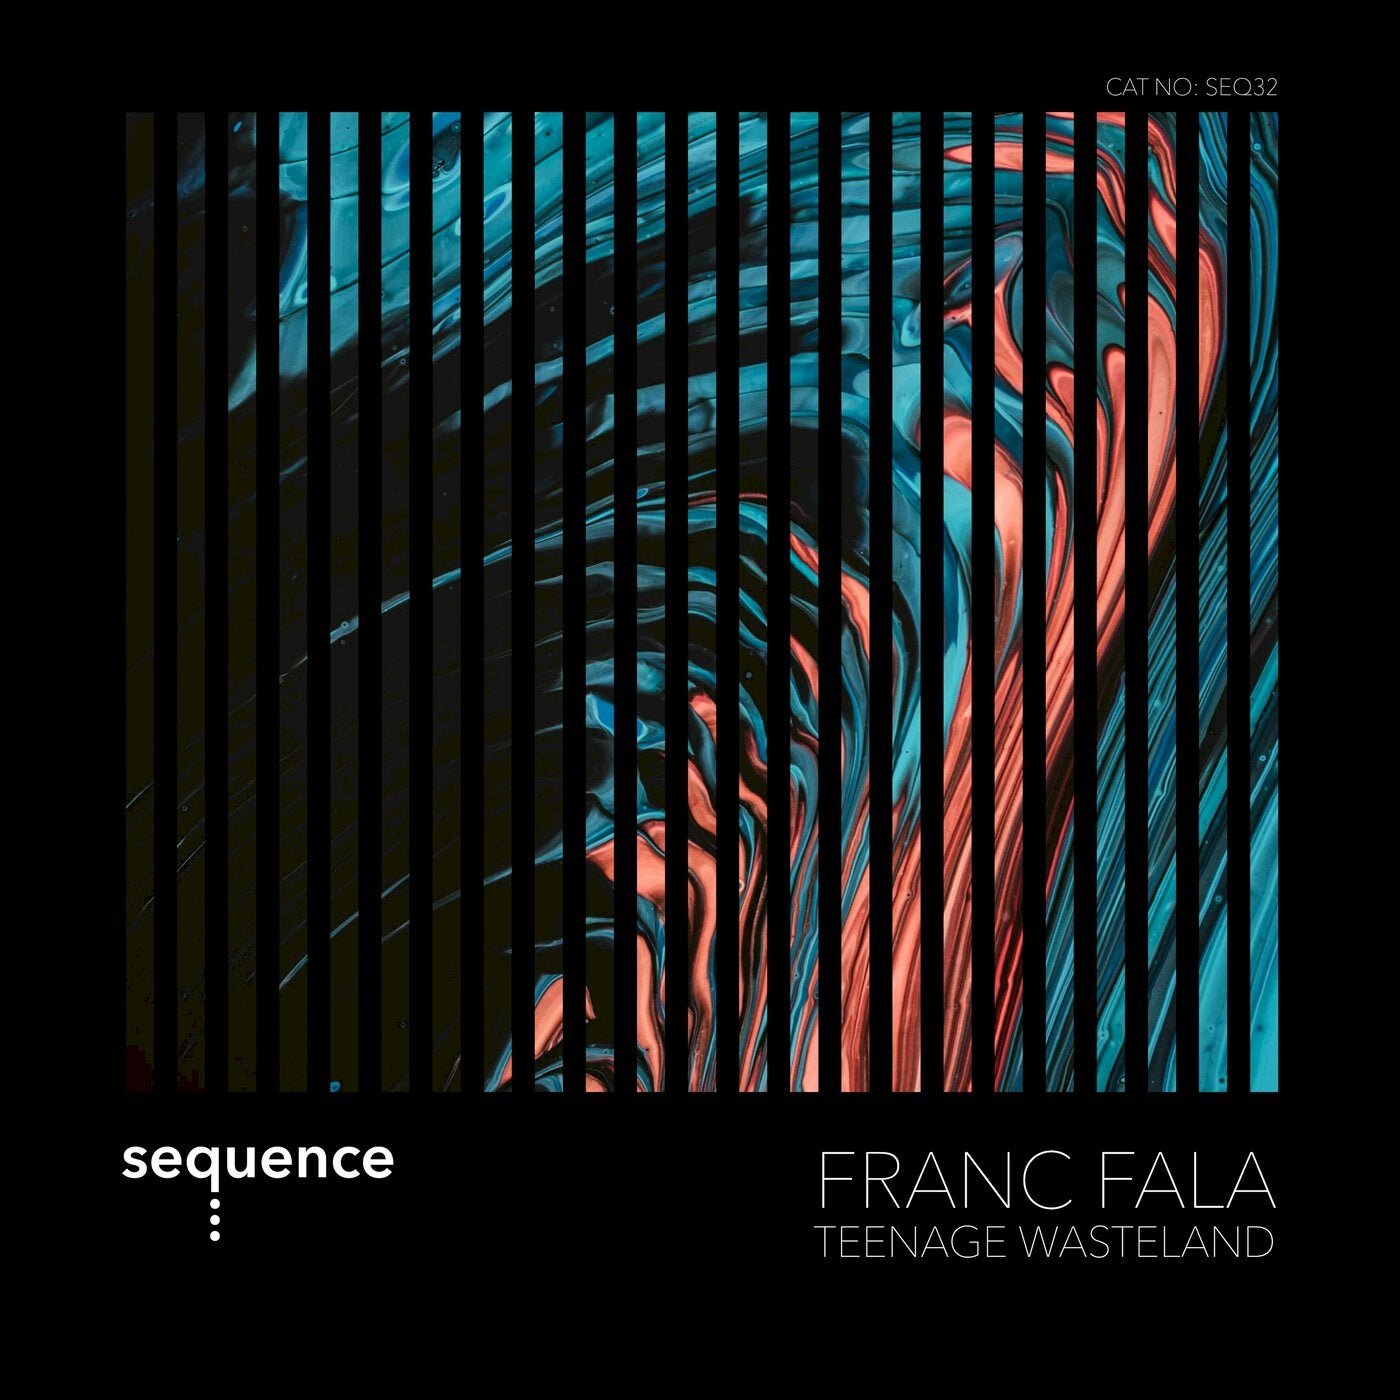 Franc Fala – Teenage Wasteland [SEQ032]